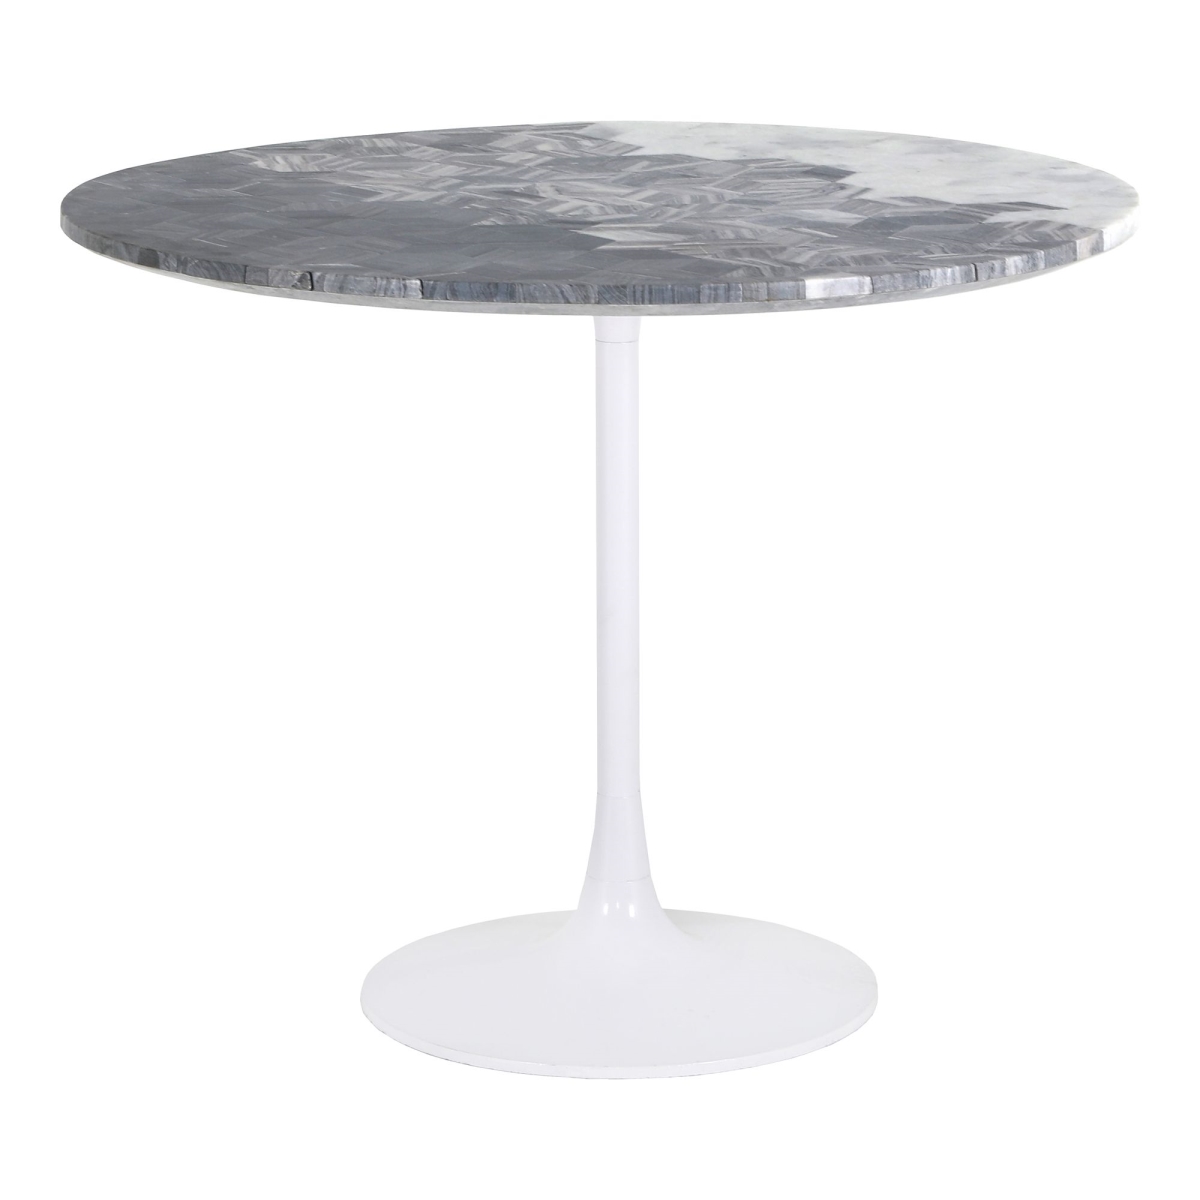 Gk-1115-15 Pierce Round Dining Table, Grey 15 & White